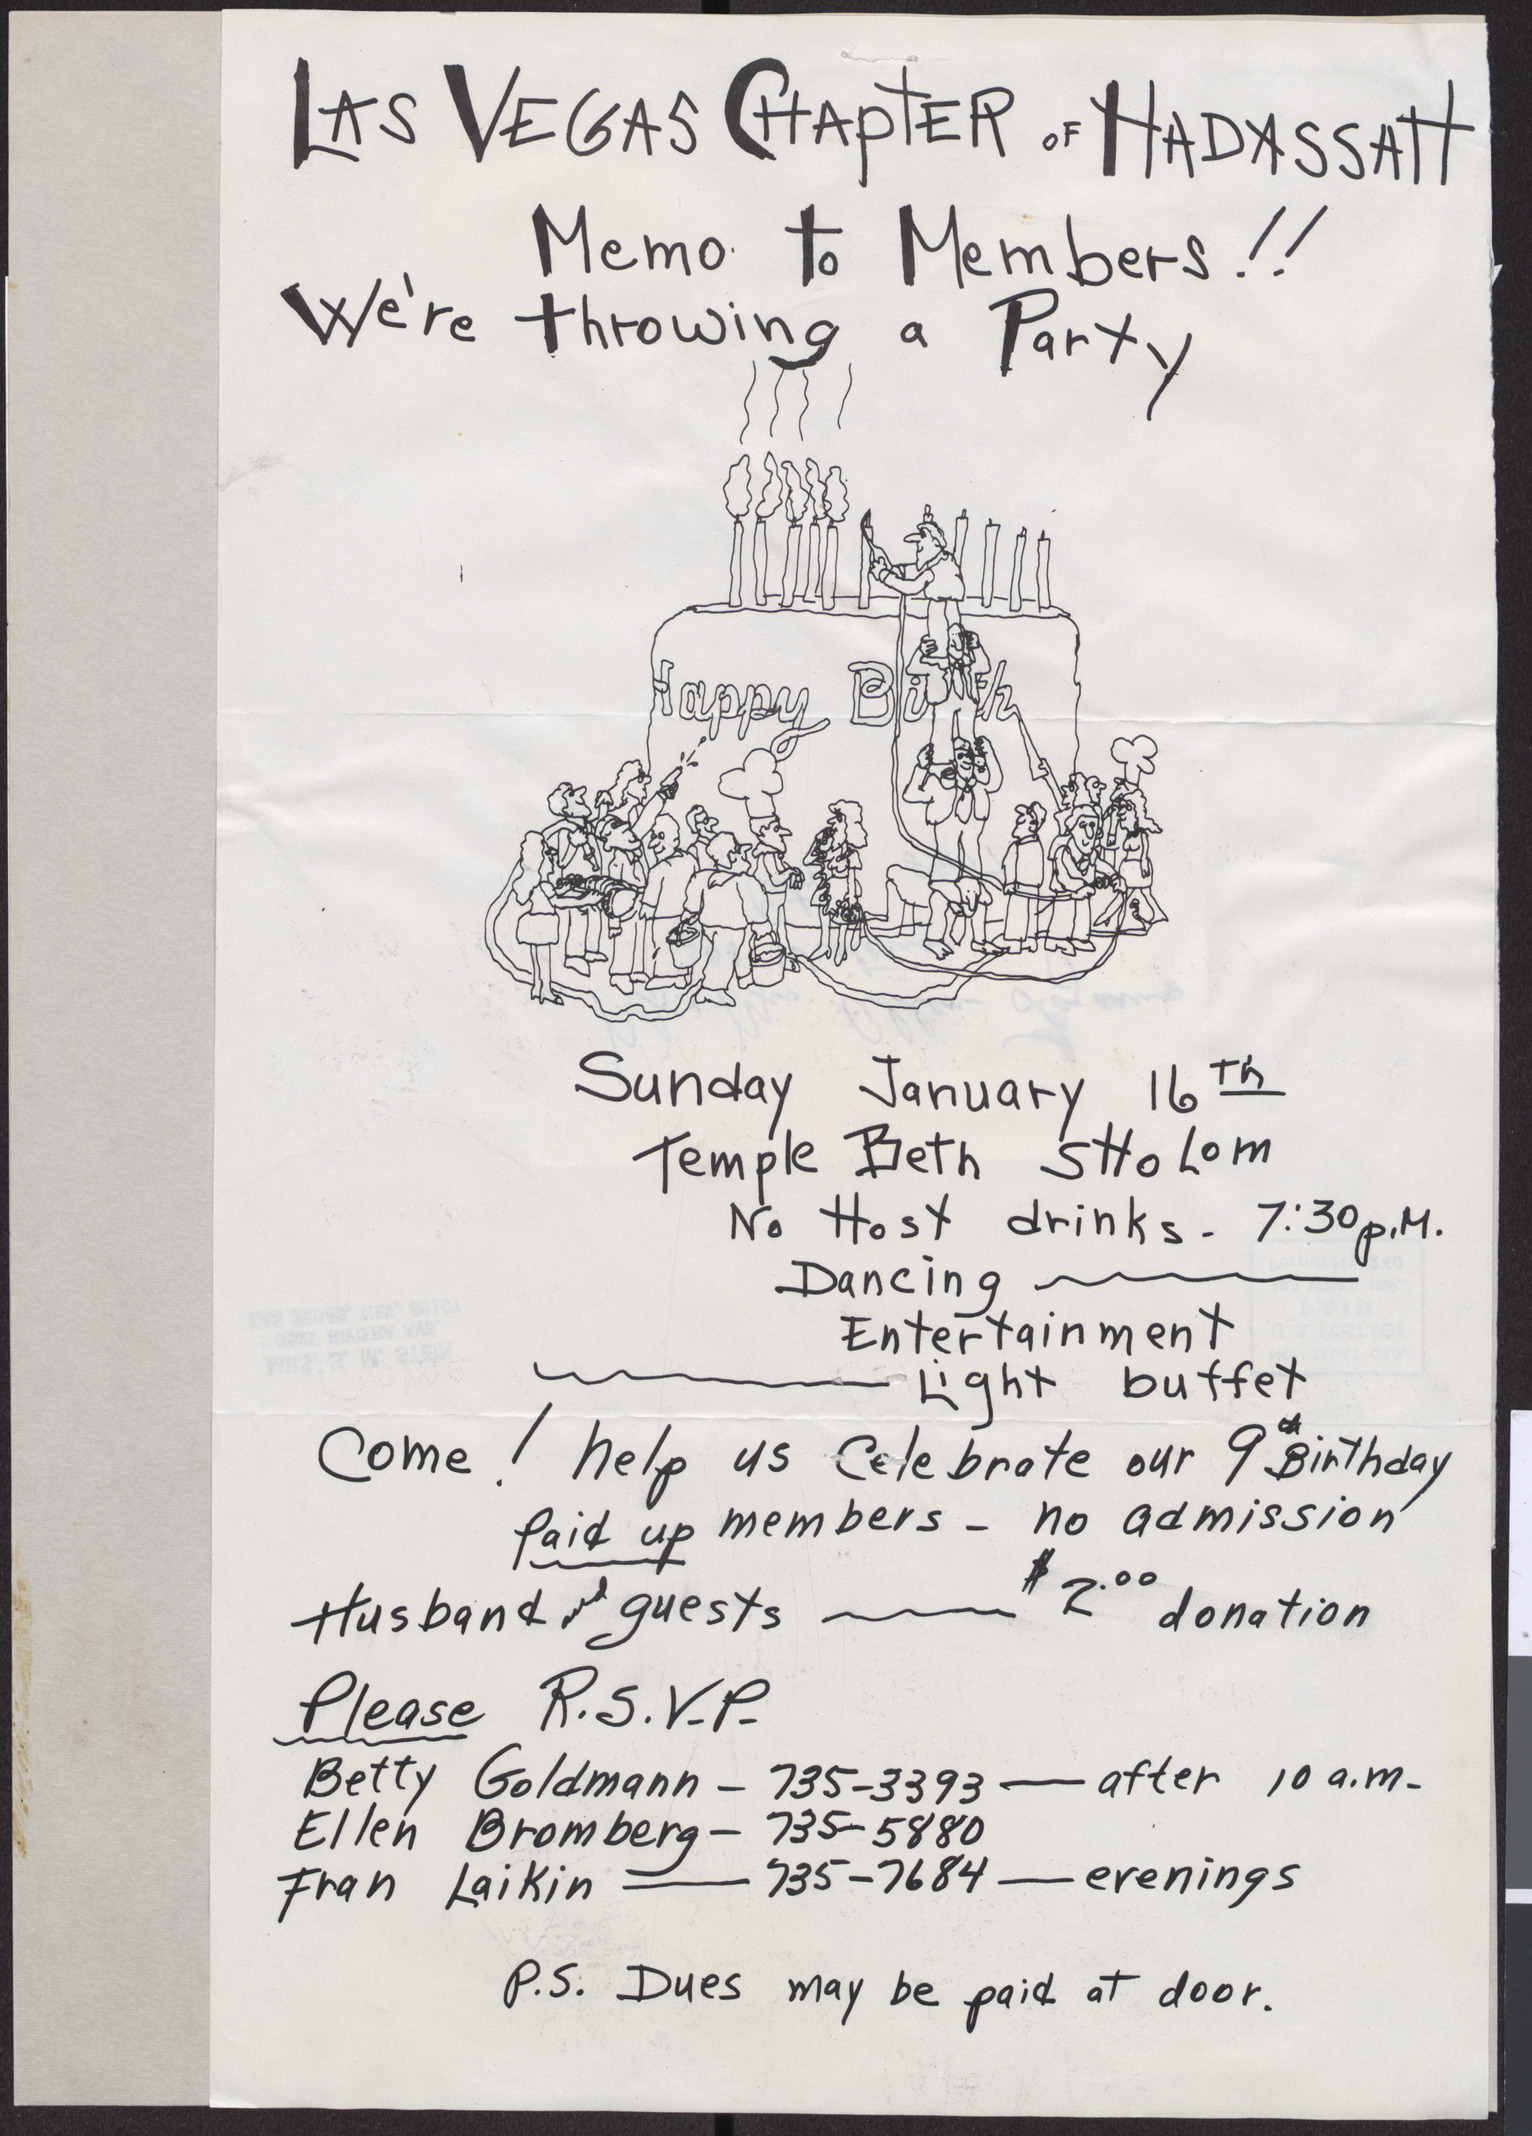 Flier for Hadassah birthday party, January 1972